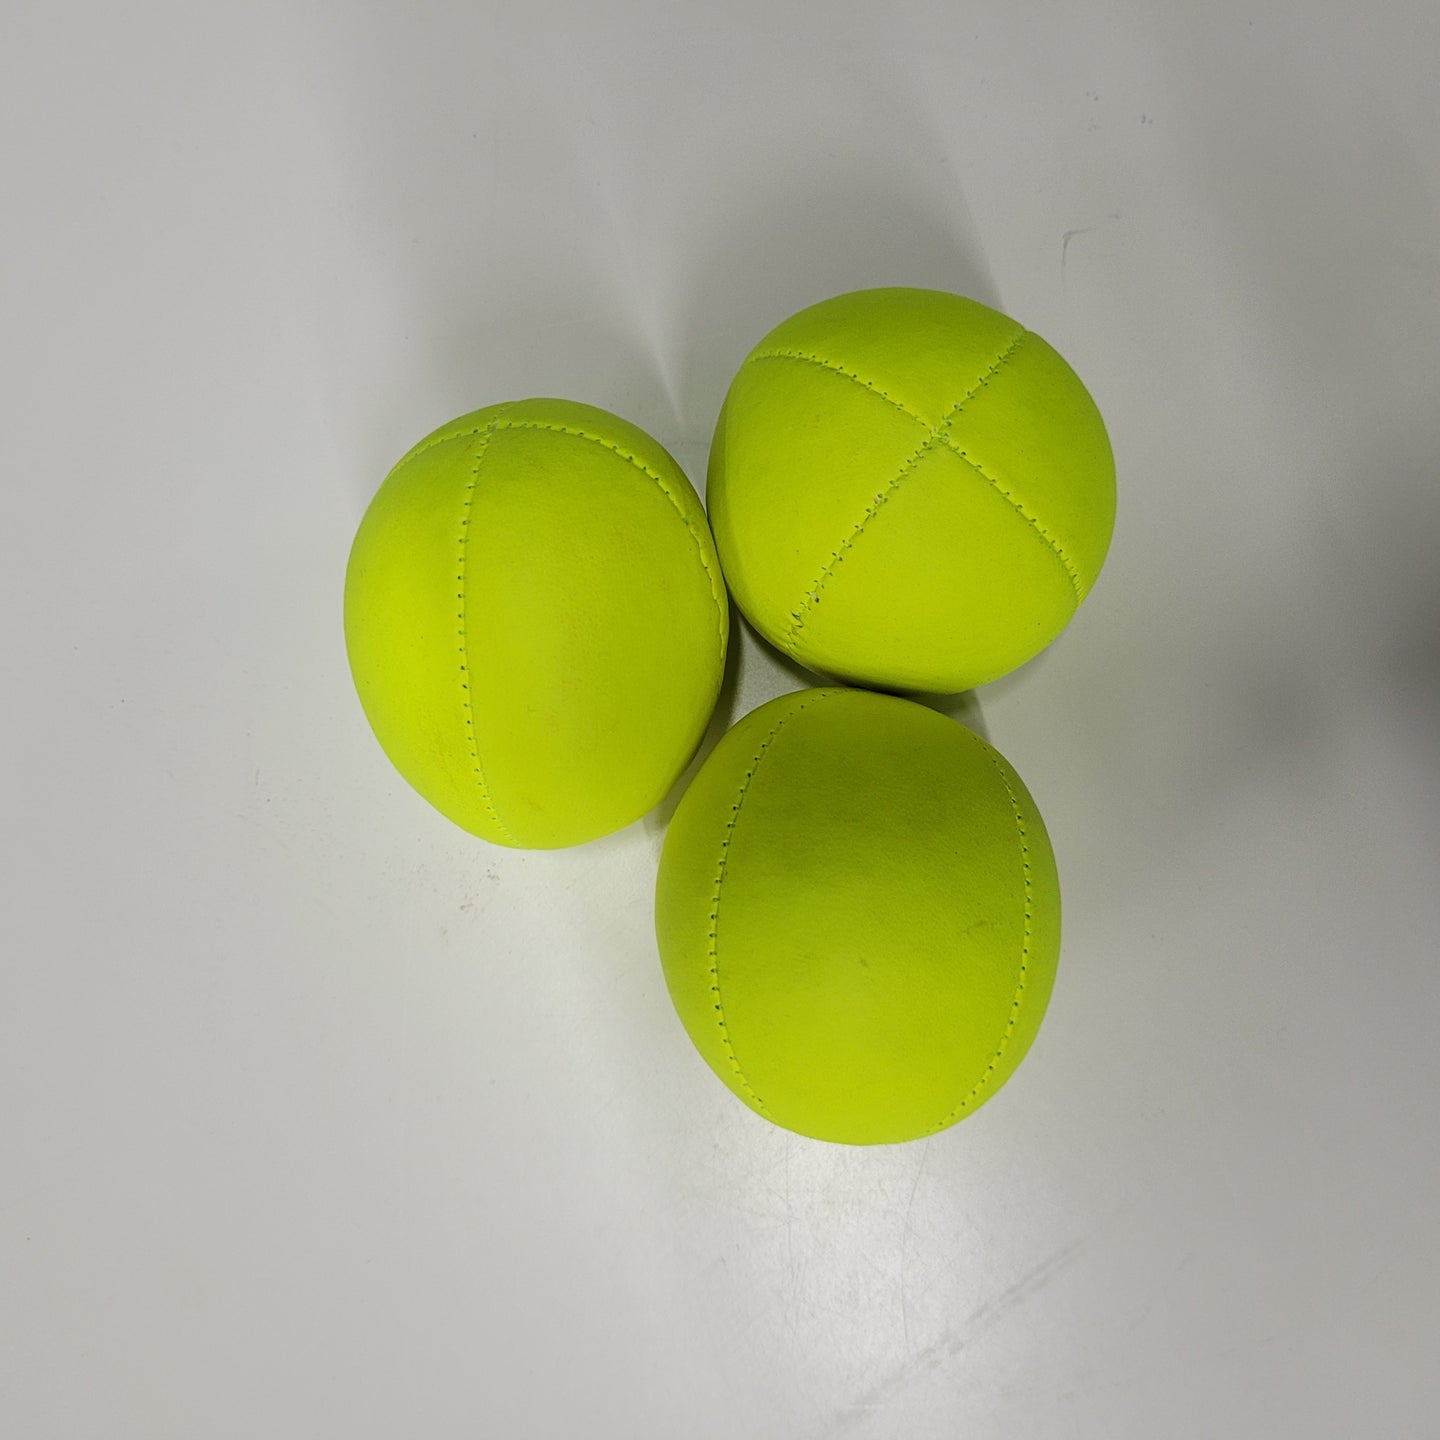 Juggle Dream Smoothie Juggling Ball - SET OF 3 - UV Yellow - Bargain Basement - RRP £10.50